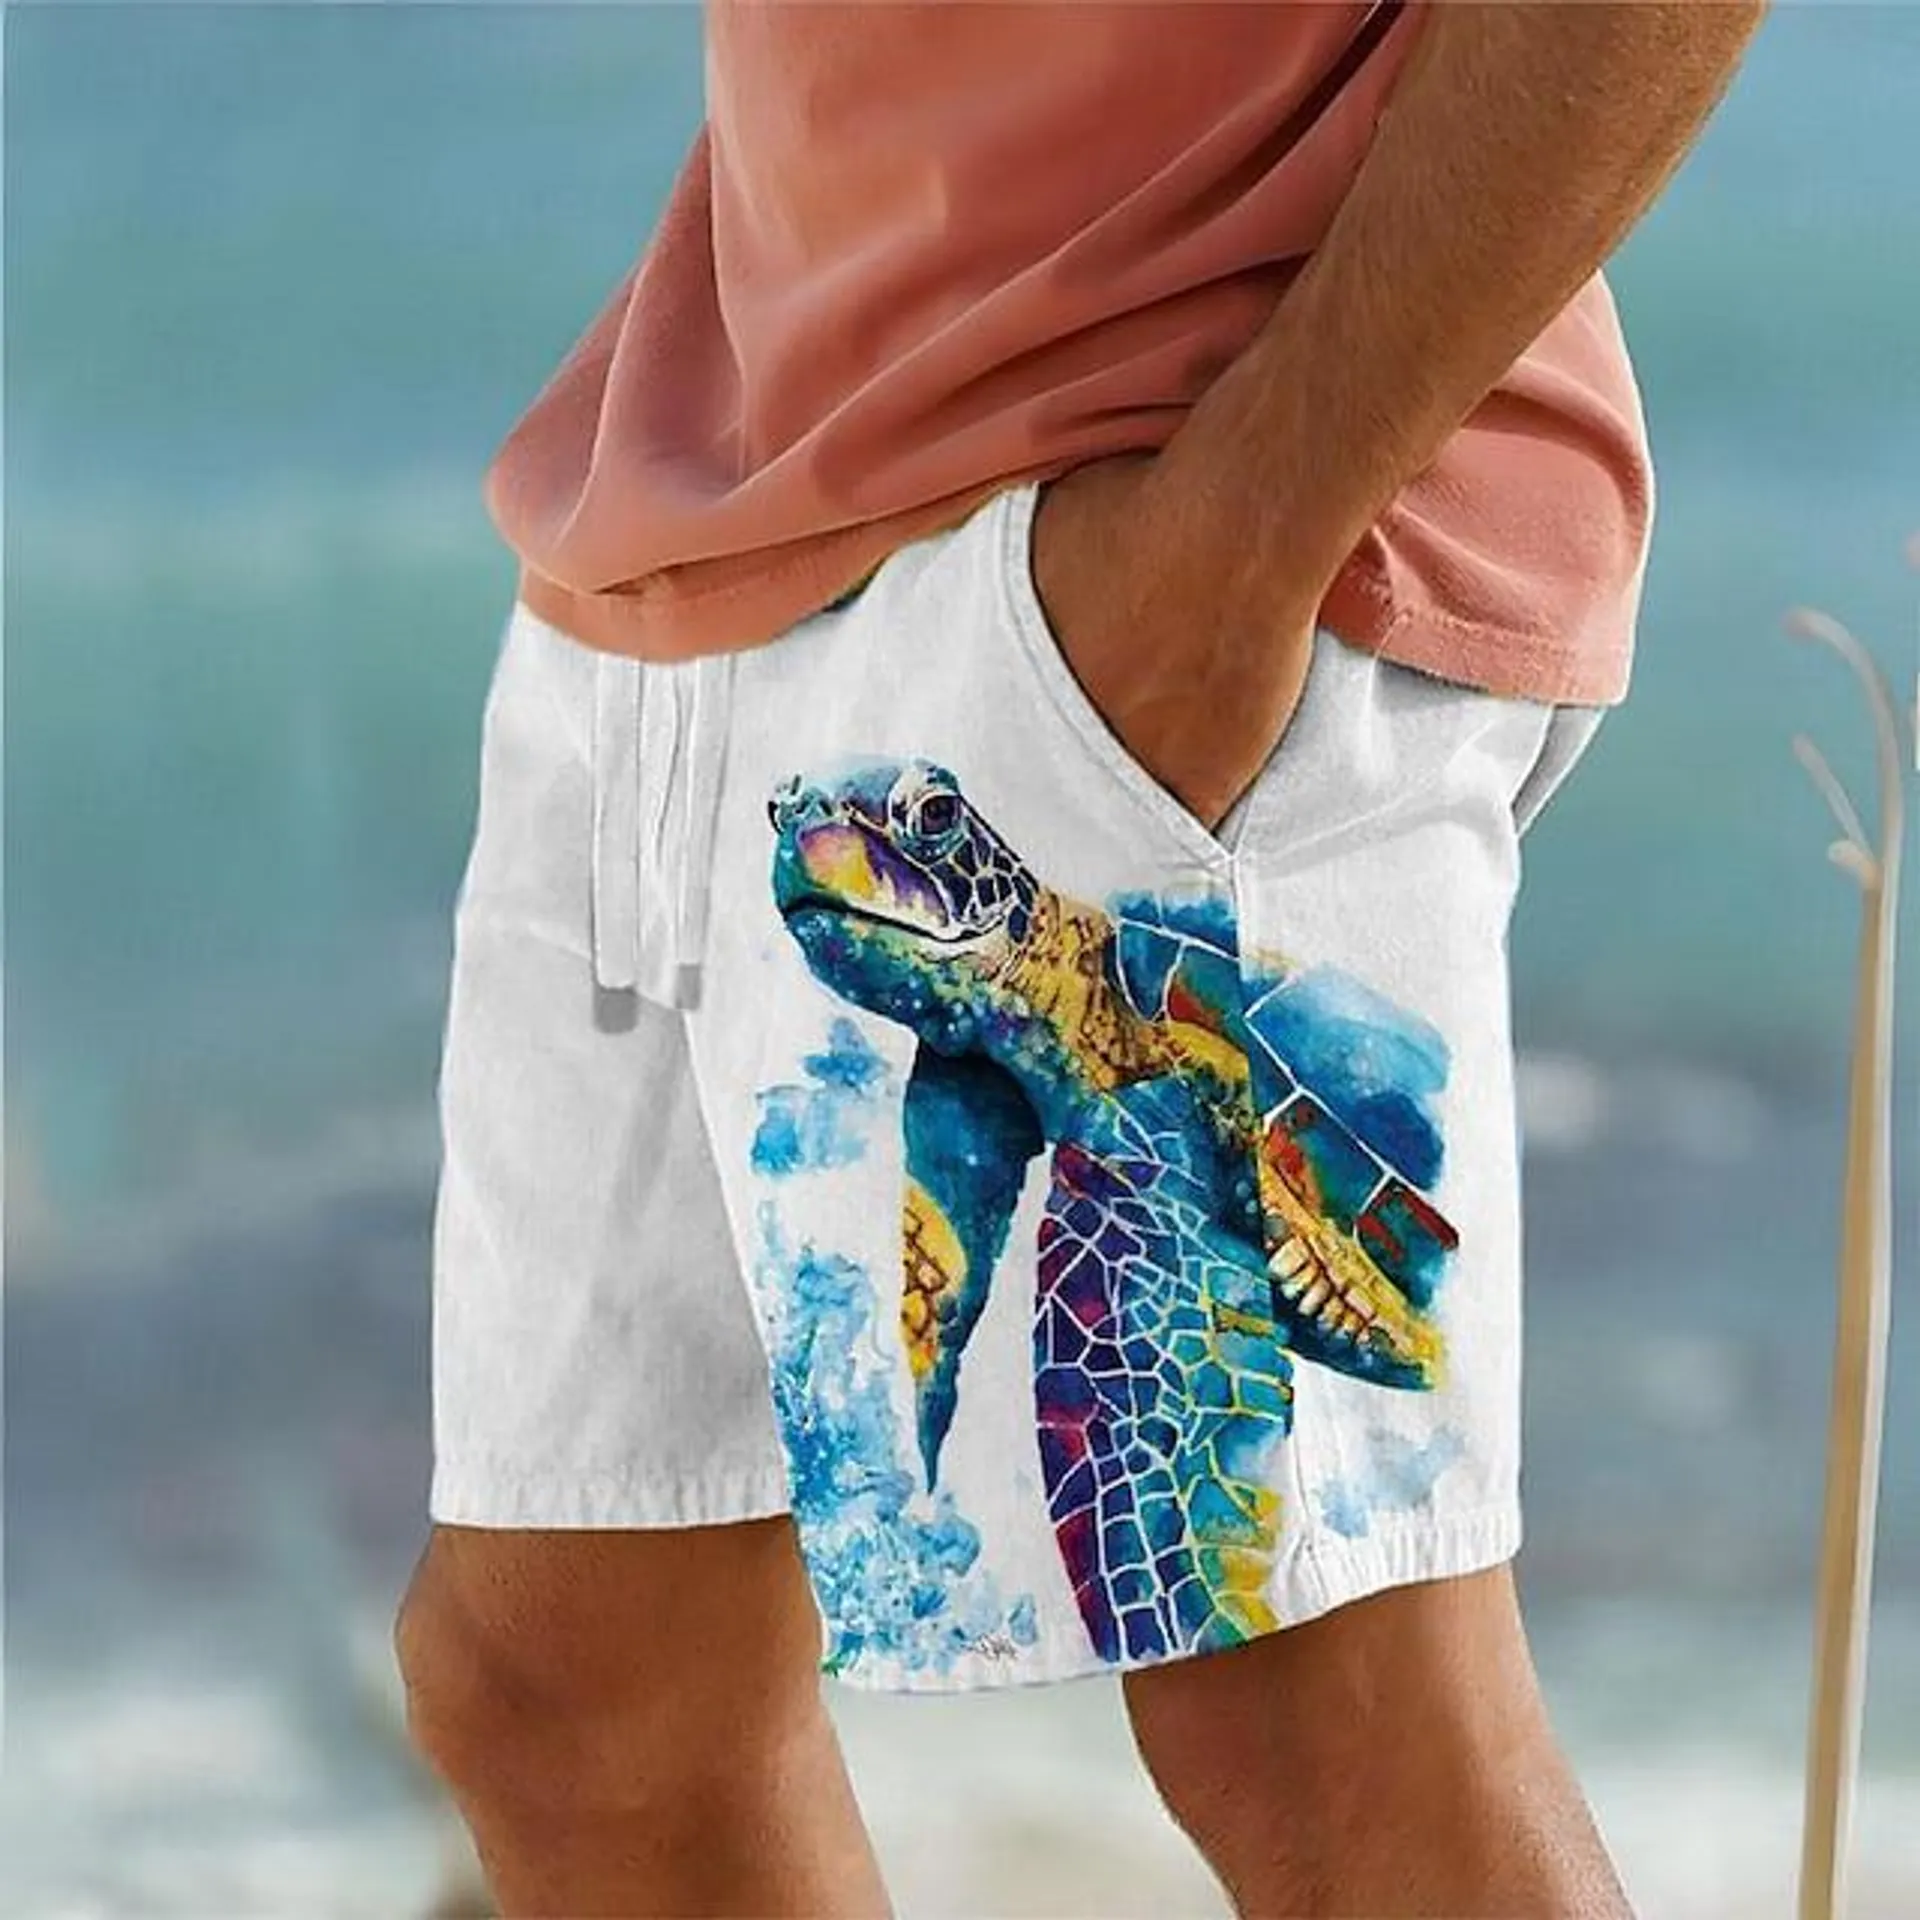 Sea Turtle Men's Resort 3D Printed Board Shorts Swim Trunks Elastic Waist Drawstring with Mesh Lining Aloha Hawaiian Style Holiday Beach S TO 3XL